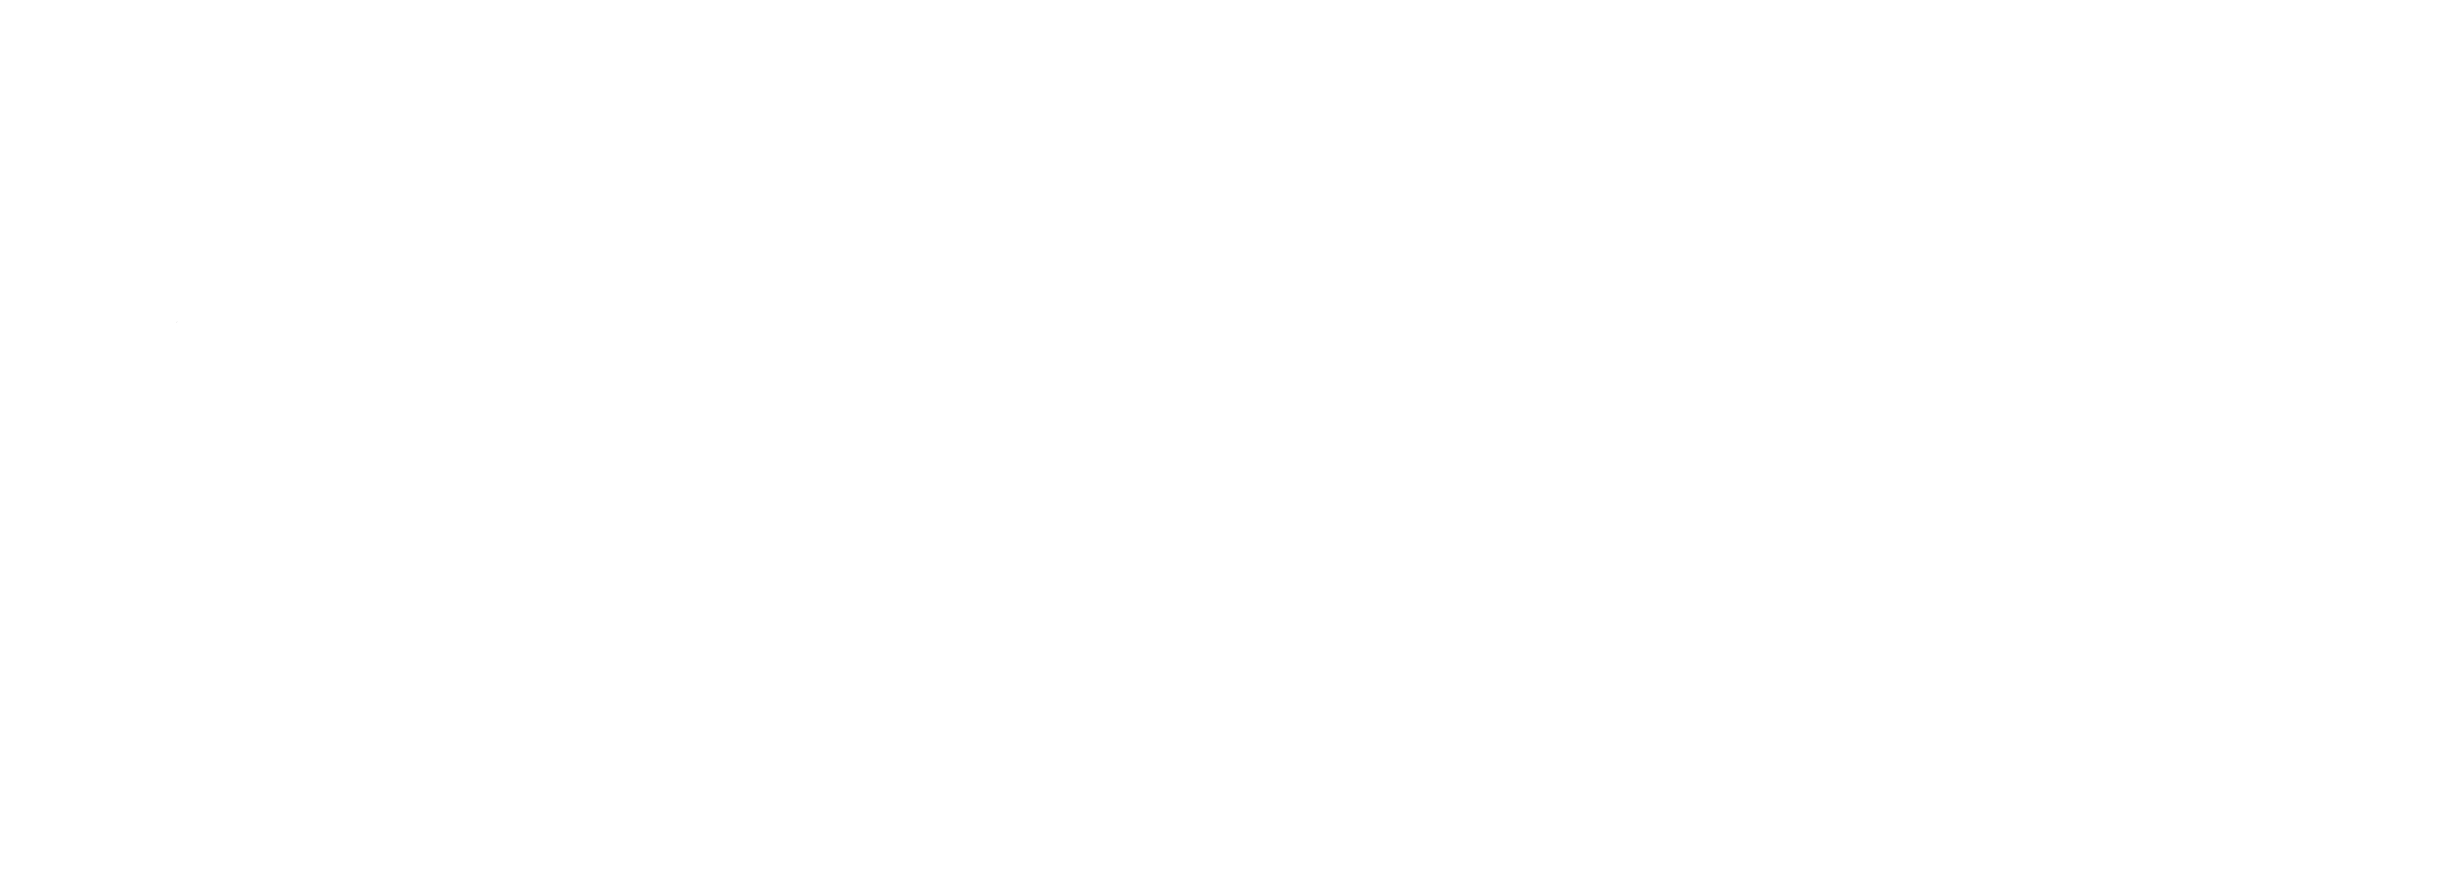 Vera Therapeutics Logo groß für dunkle Hintergründe (transparentes PNG)